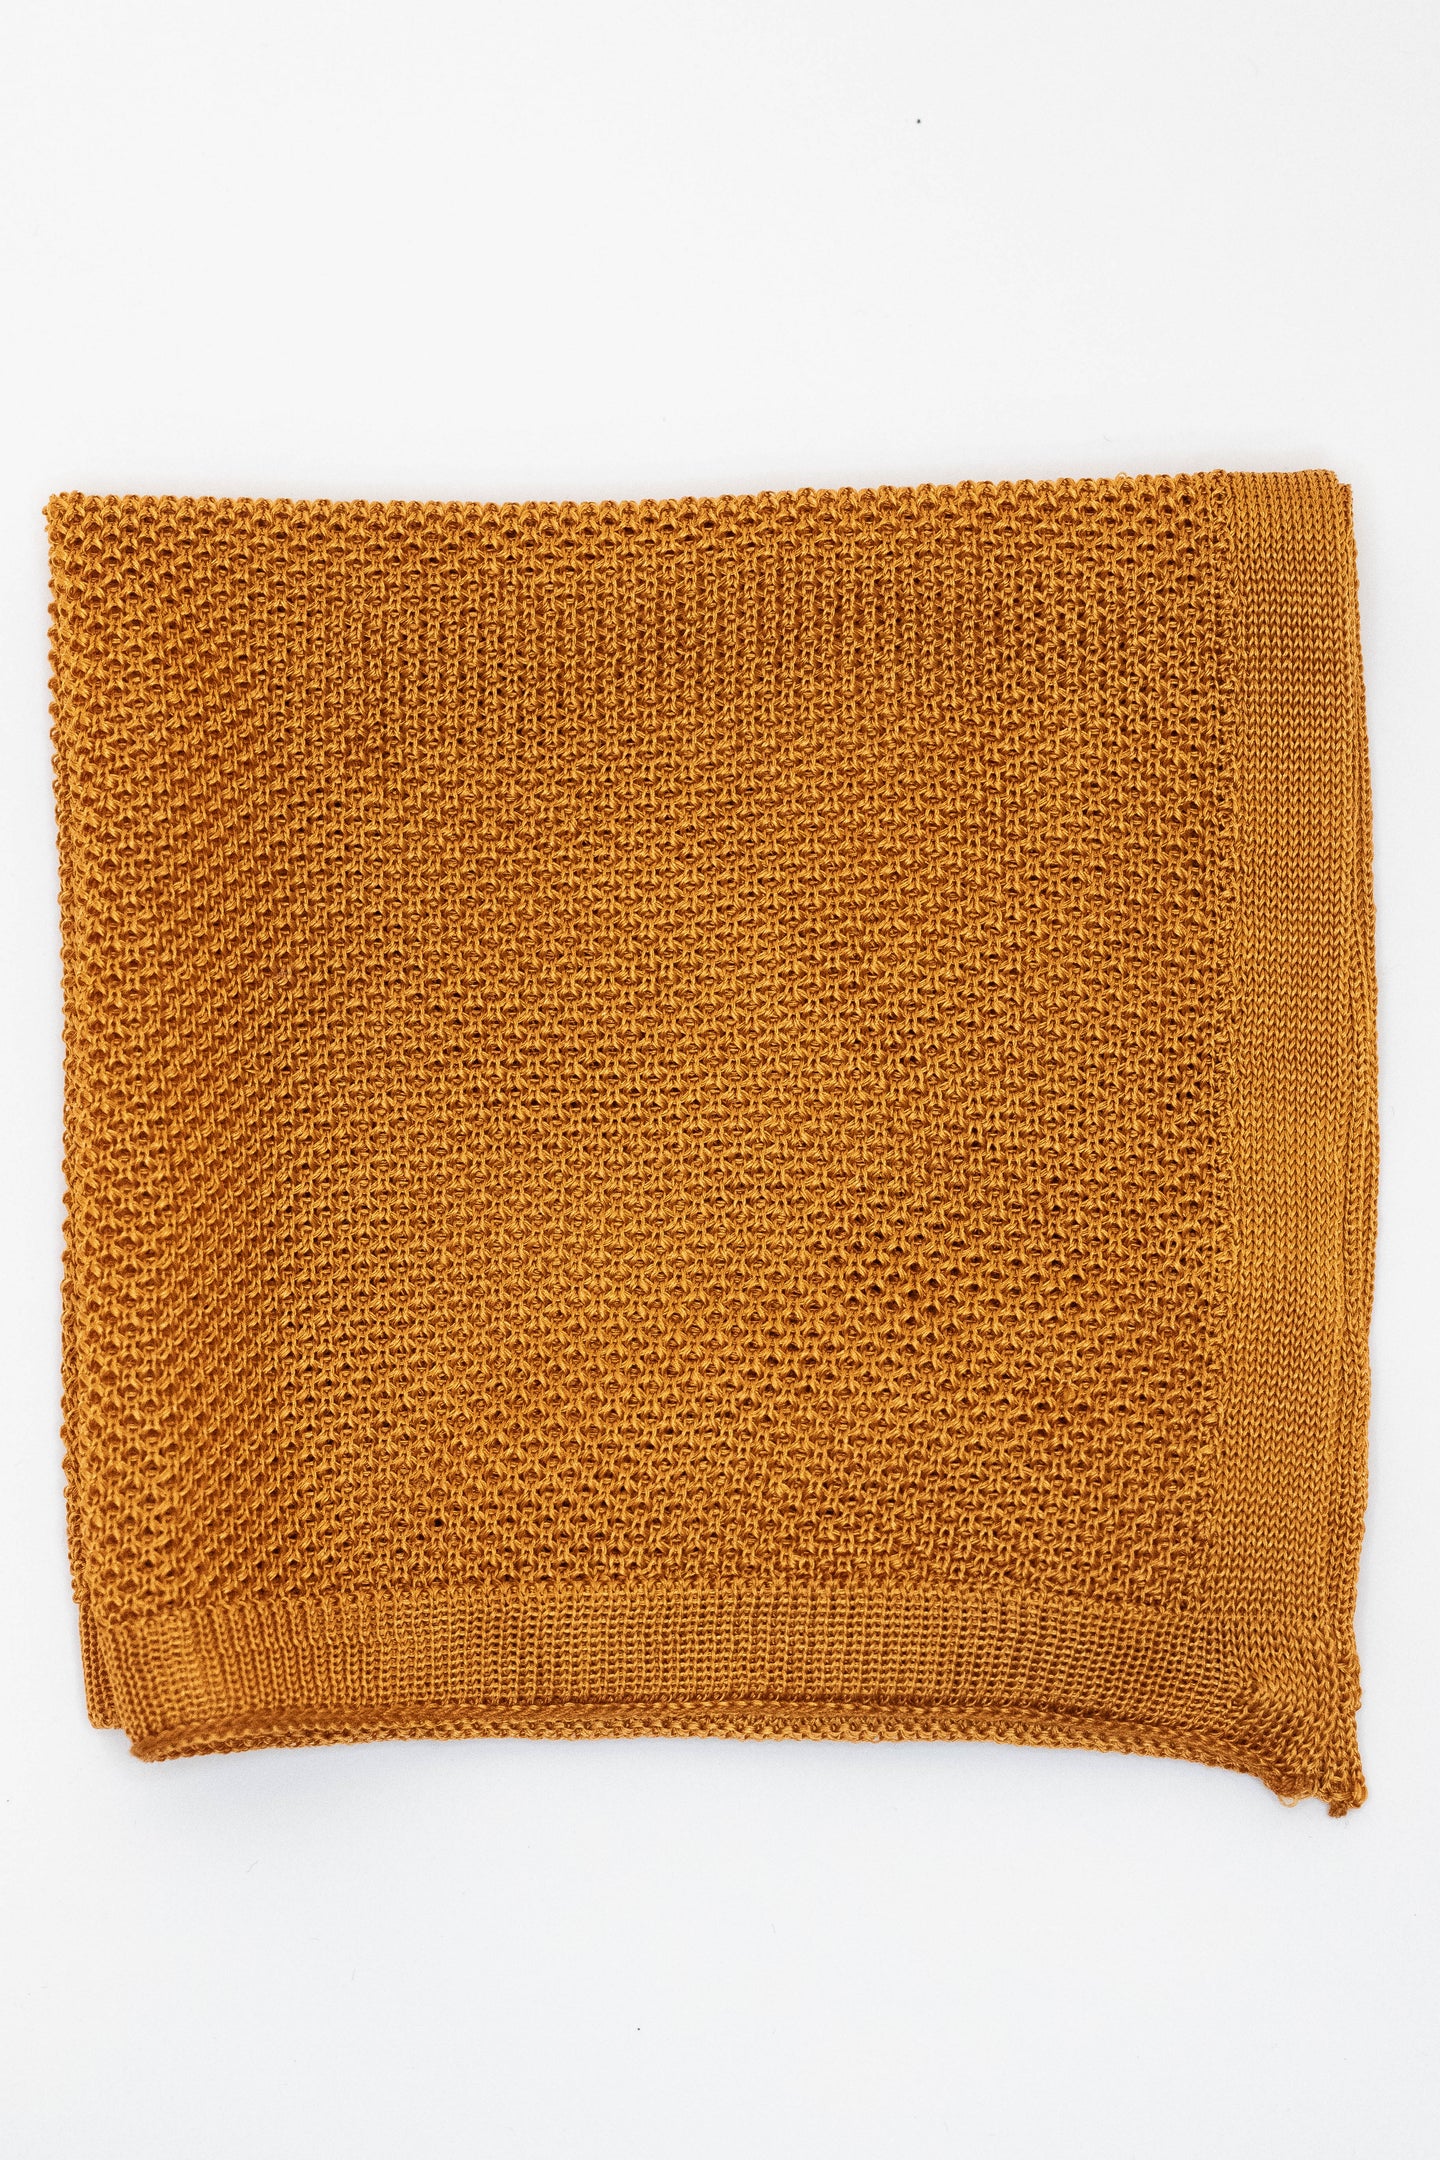 Knightsbridge Neckwear Plain Vintage Gold Silk Knitted Pocket Square